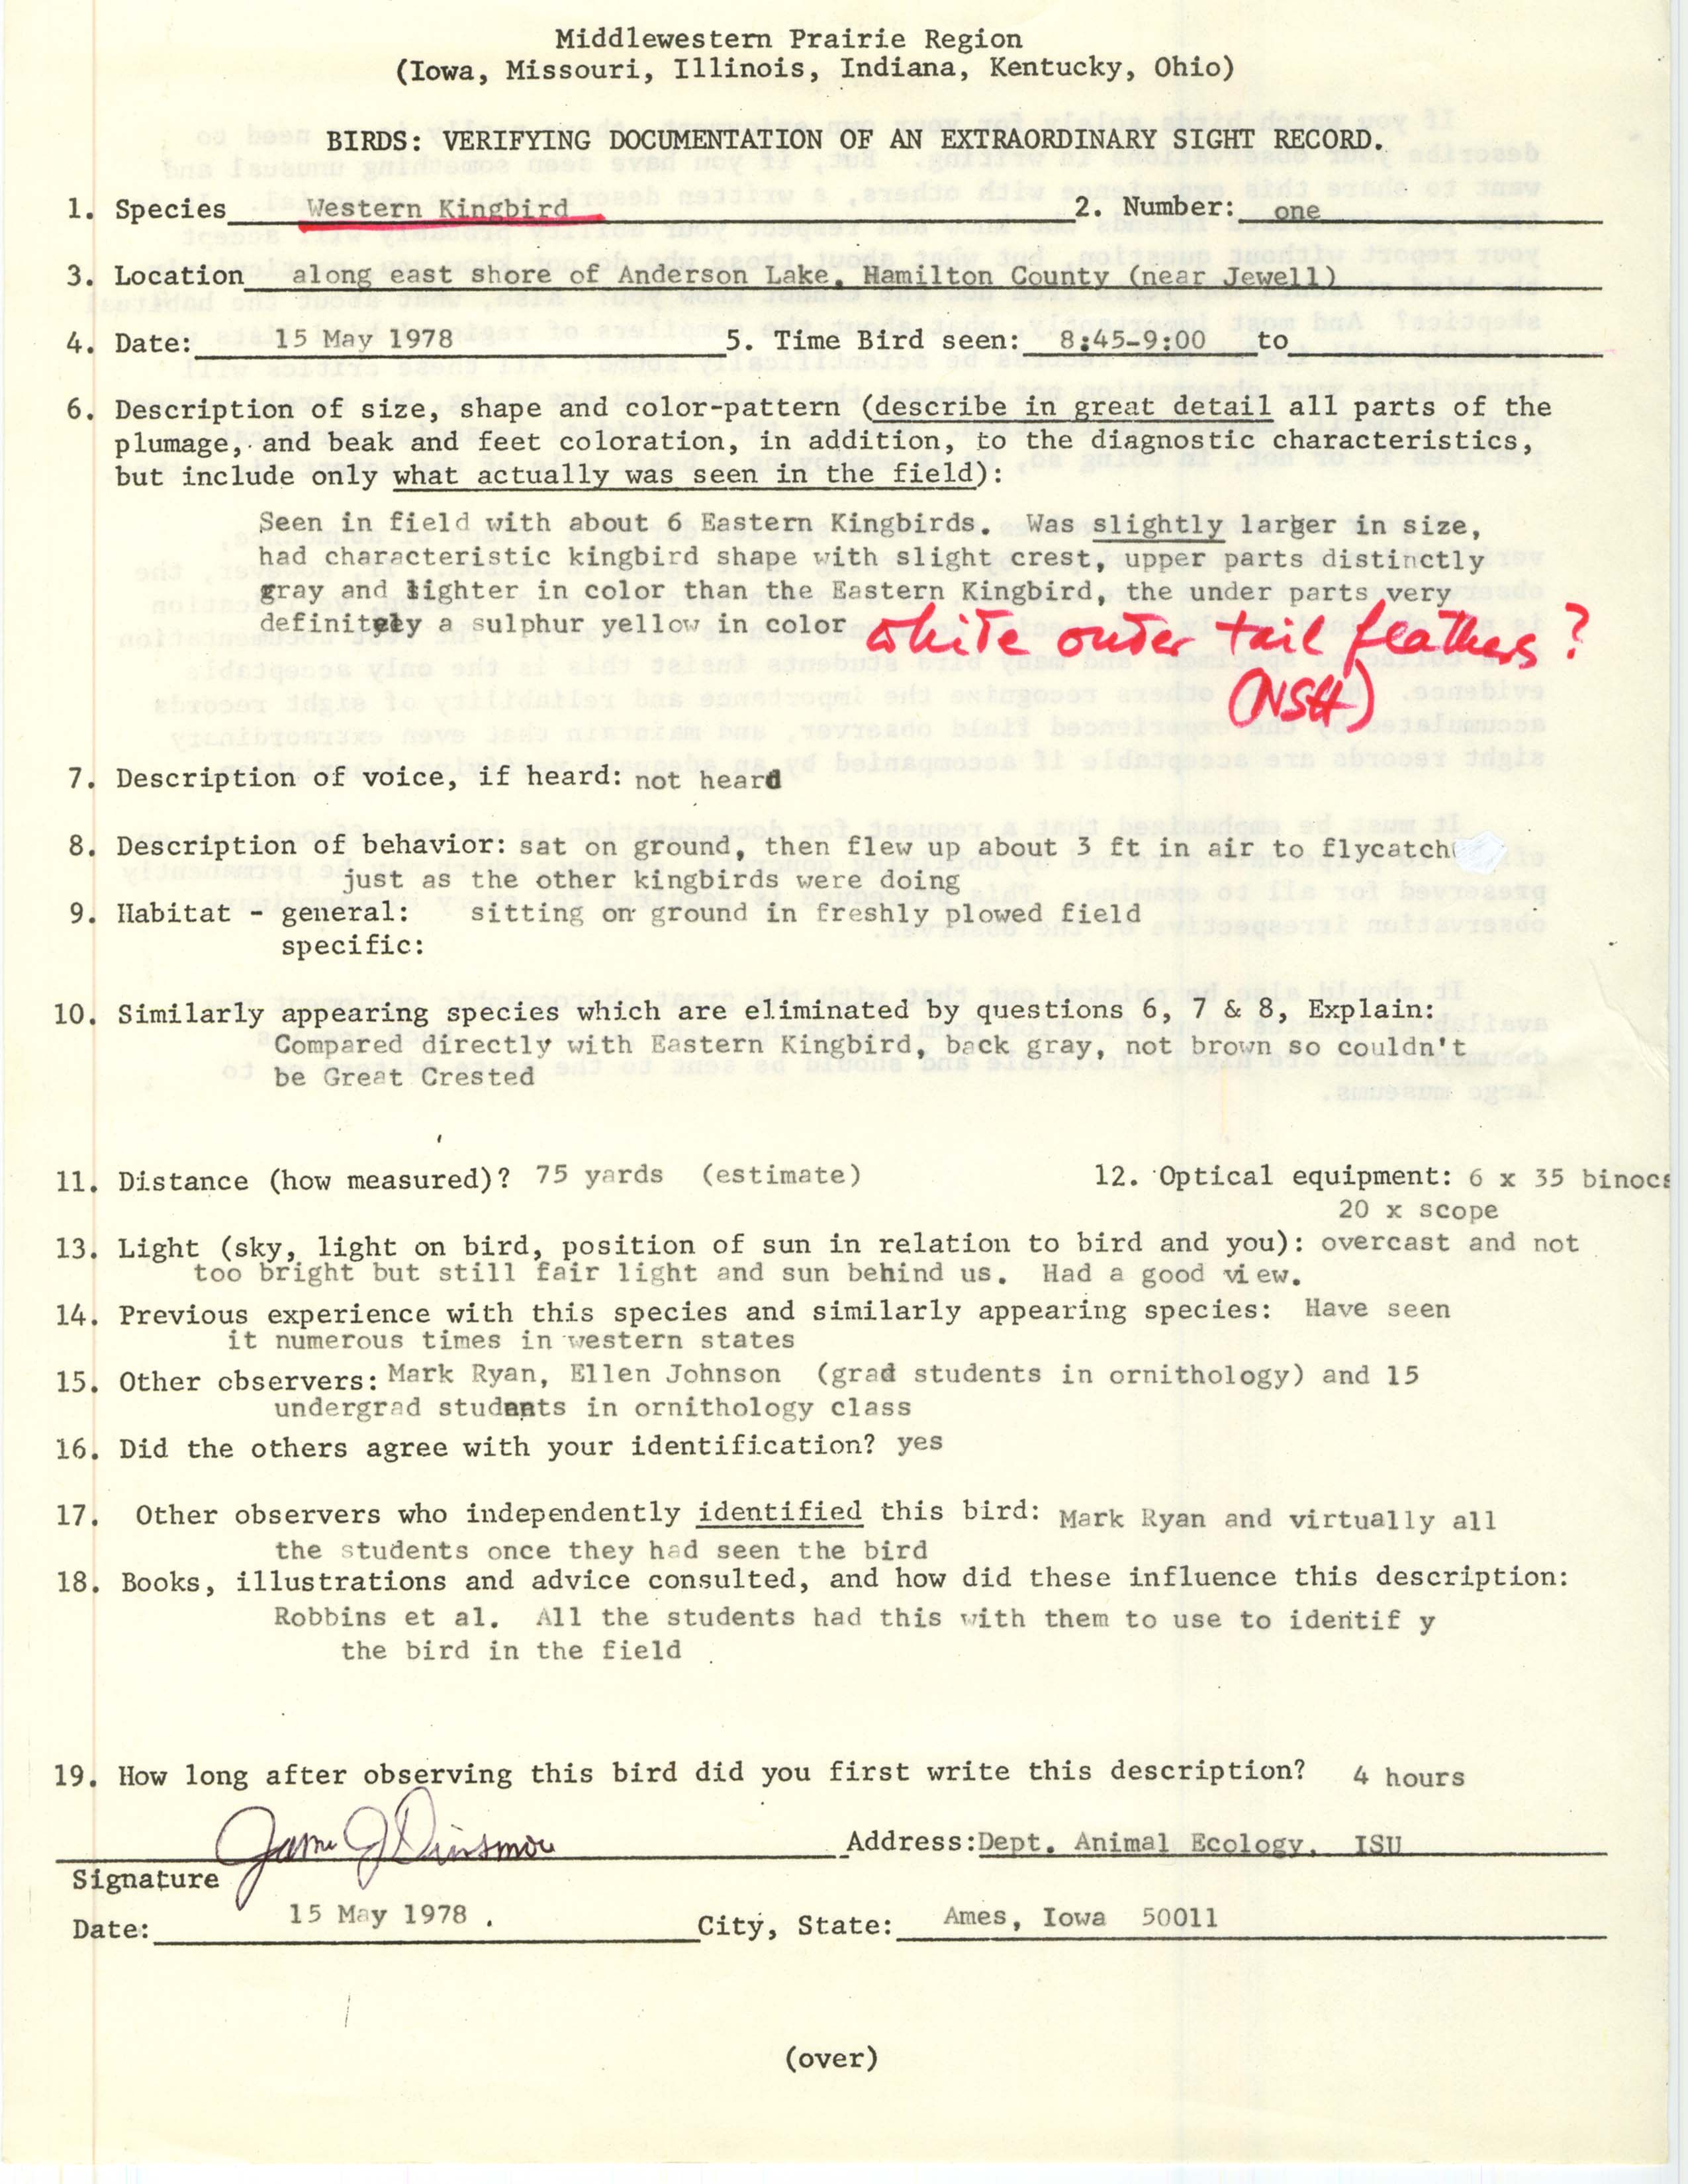 Rare bird documentation form for Western Kingbird at Anderson Goose Lake, 1978